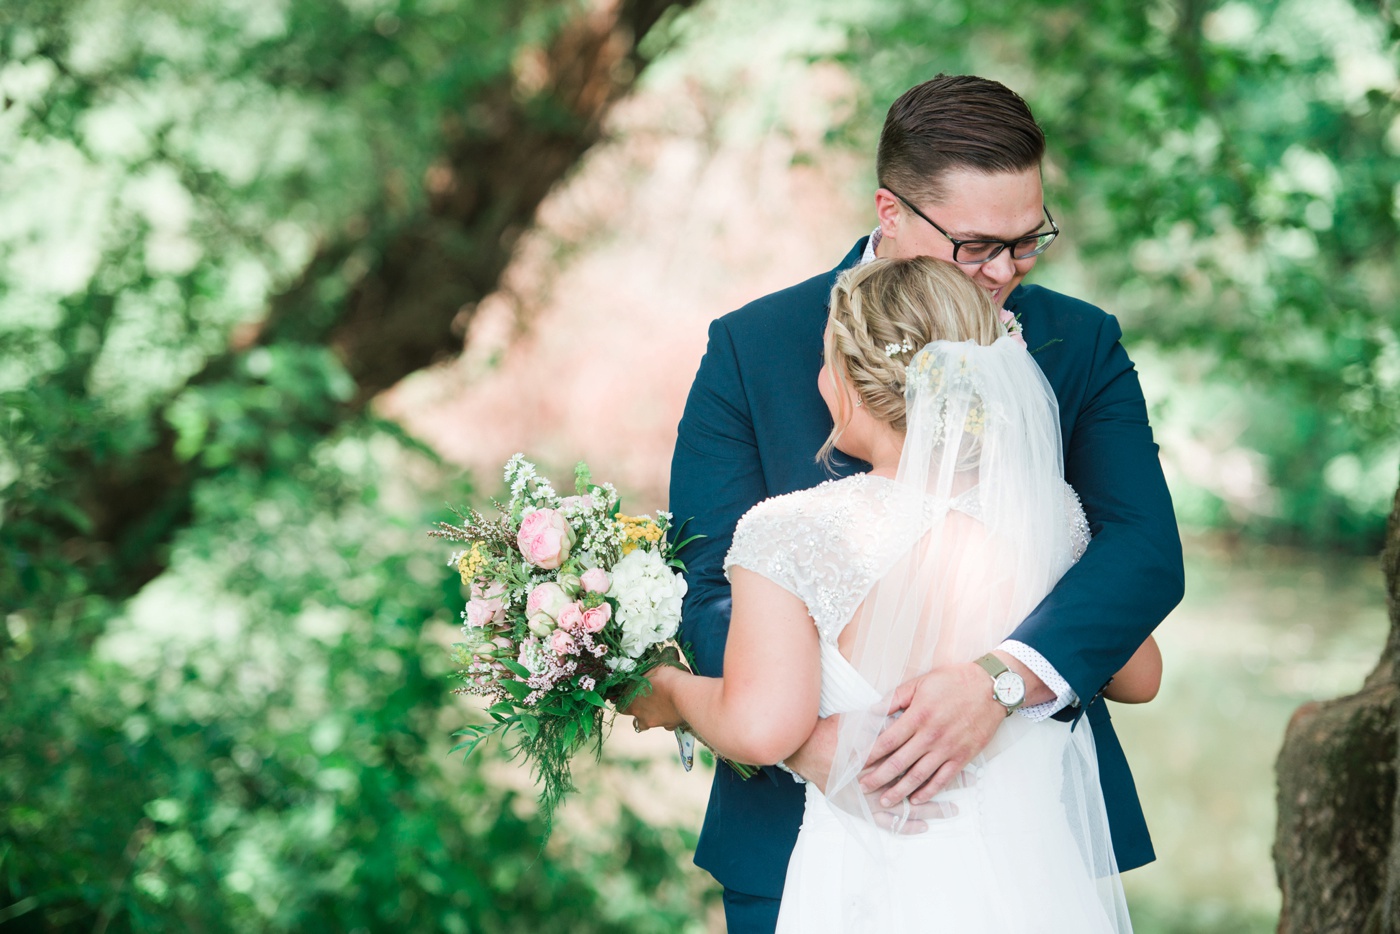 Kristen + John - Stroud Preserve First Look - Reading Pennsylvania Wedding Photographer - Alison Dunn Photography photo